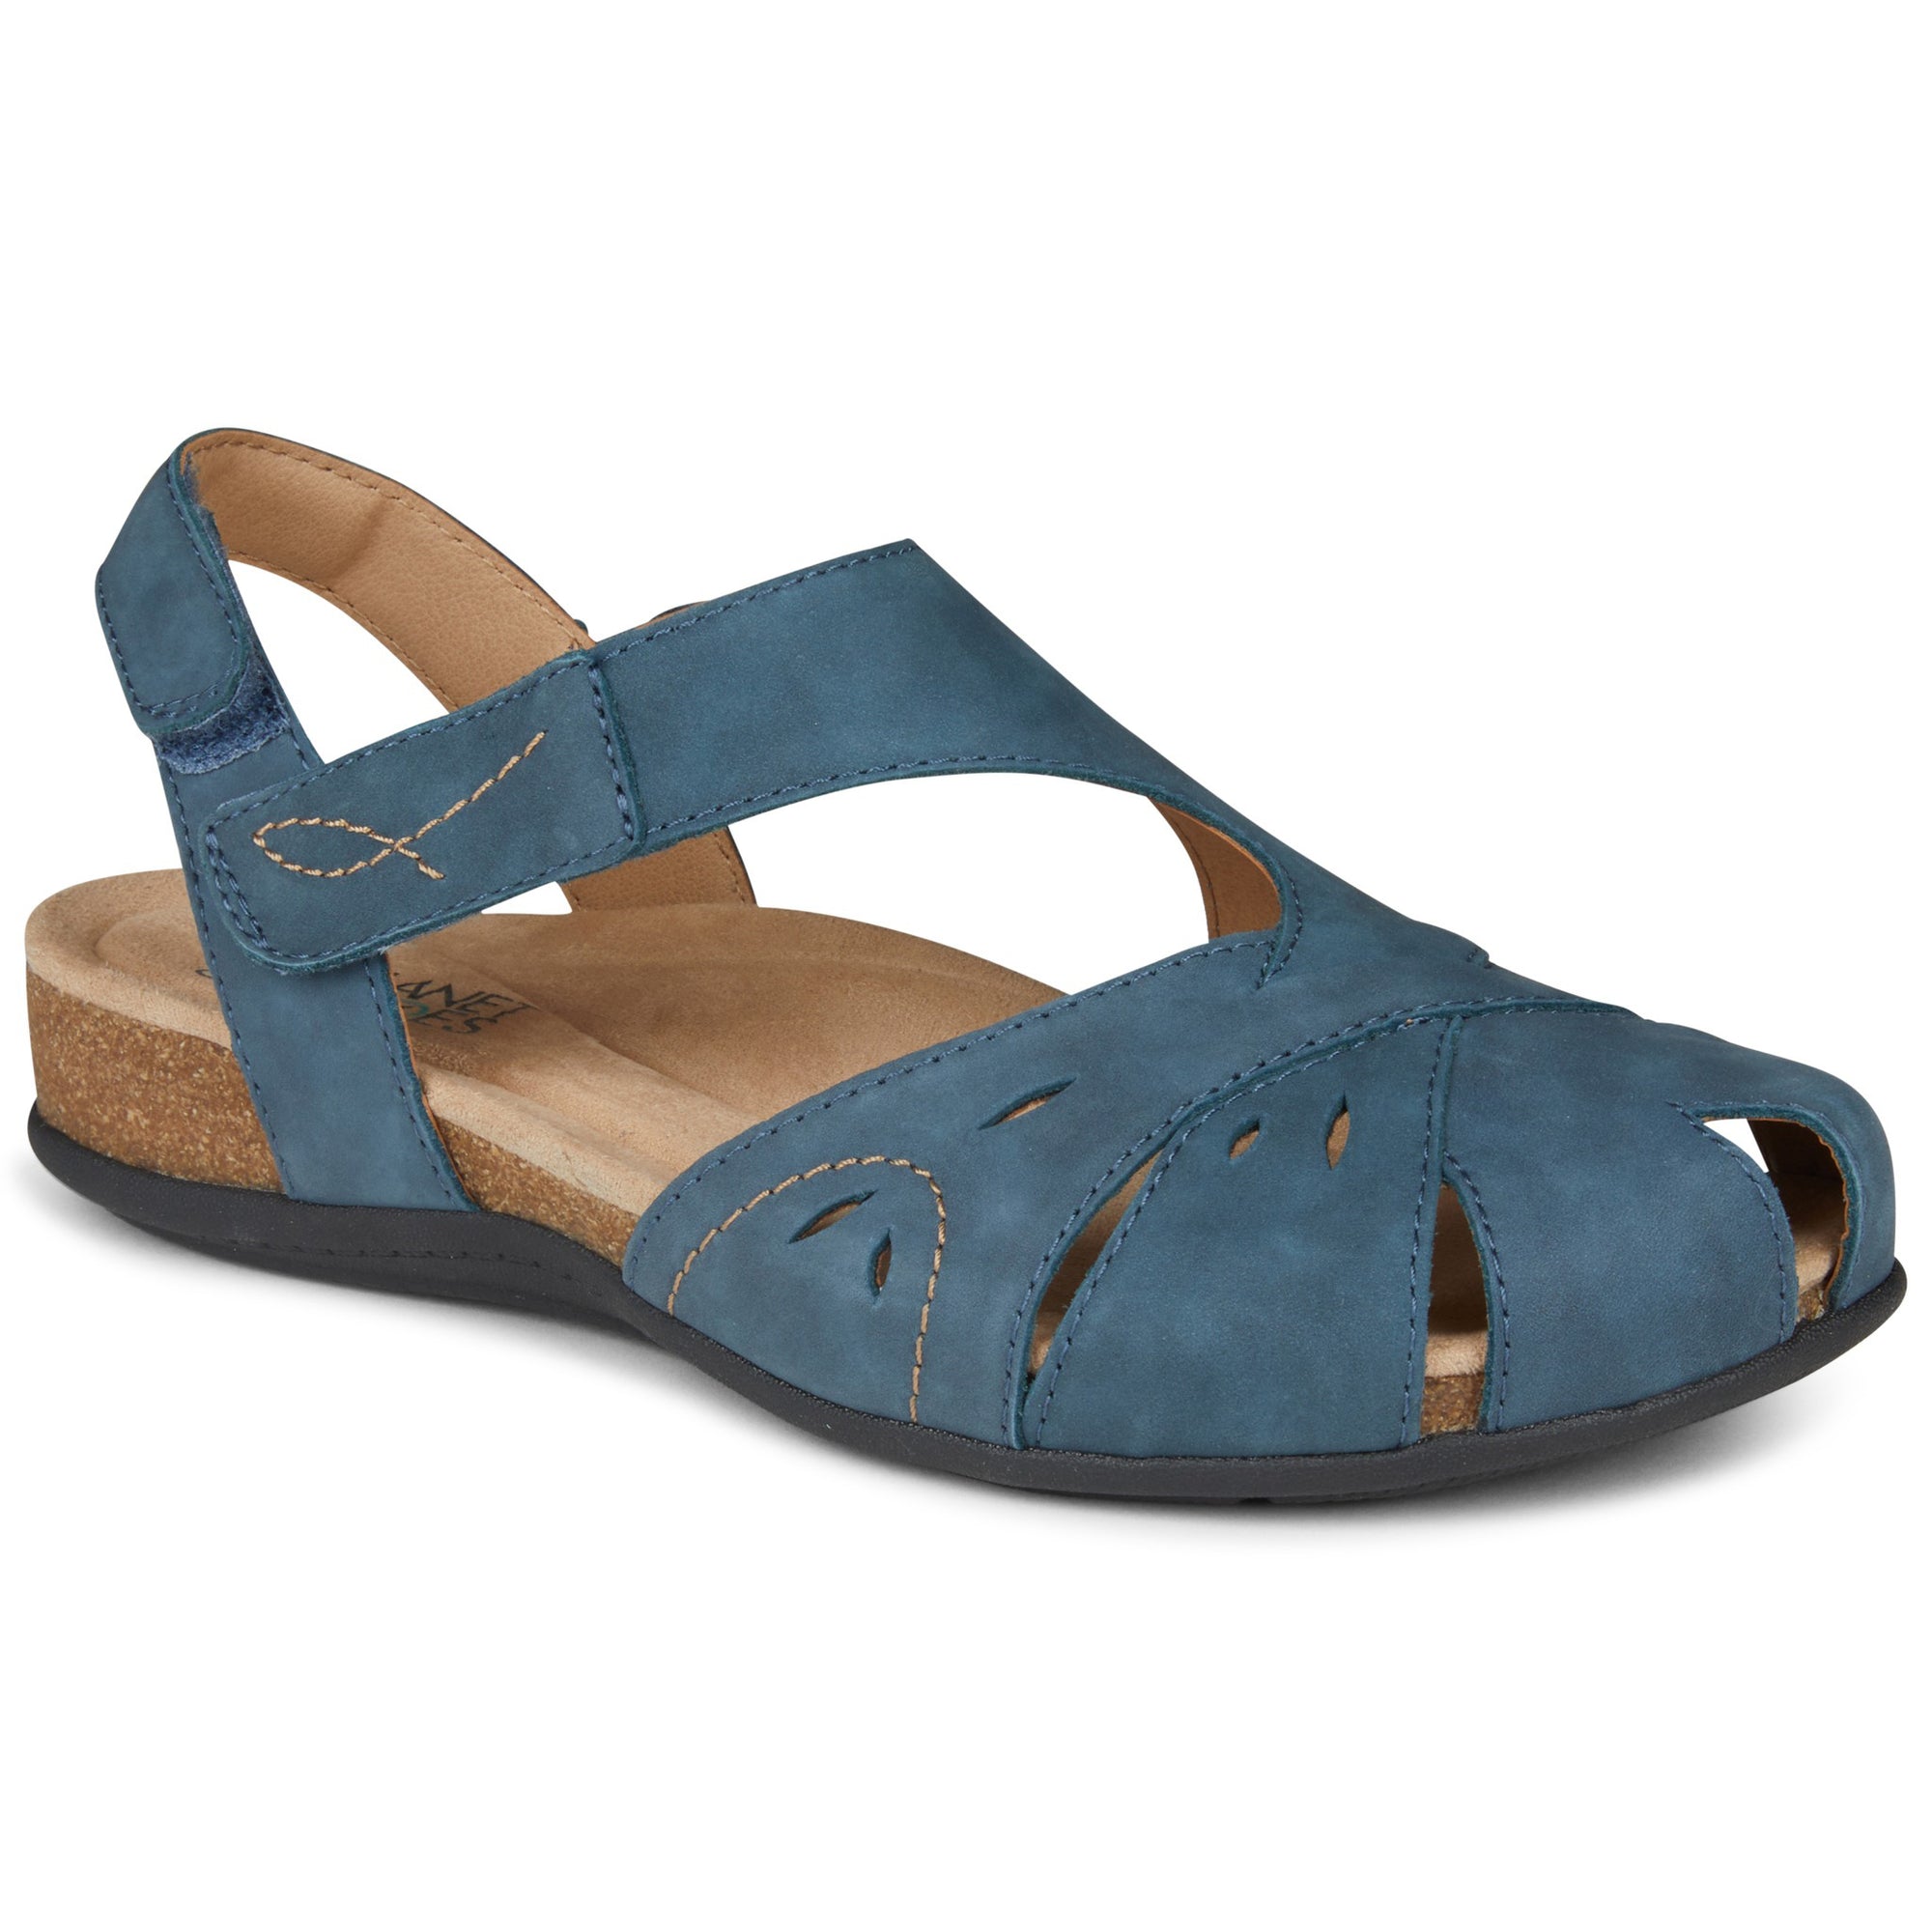 Birdine Blue Sandals | Buy online at Planet Shoes